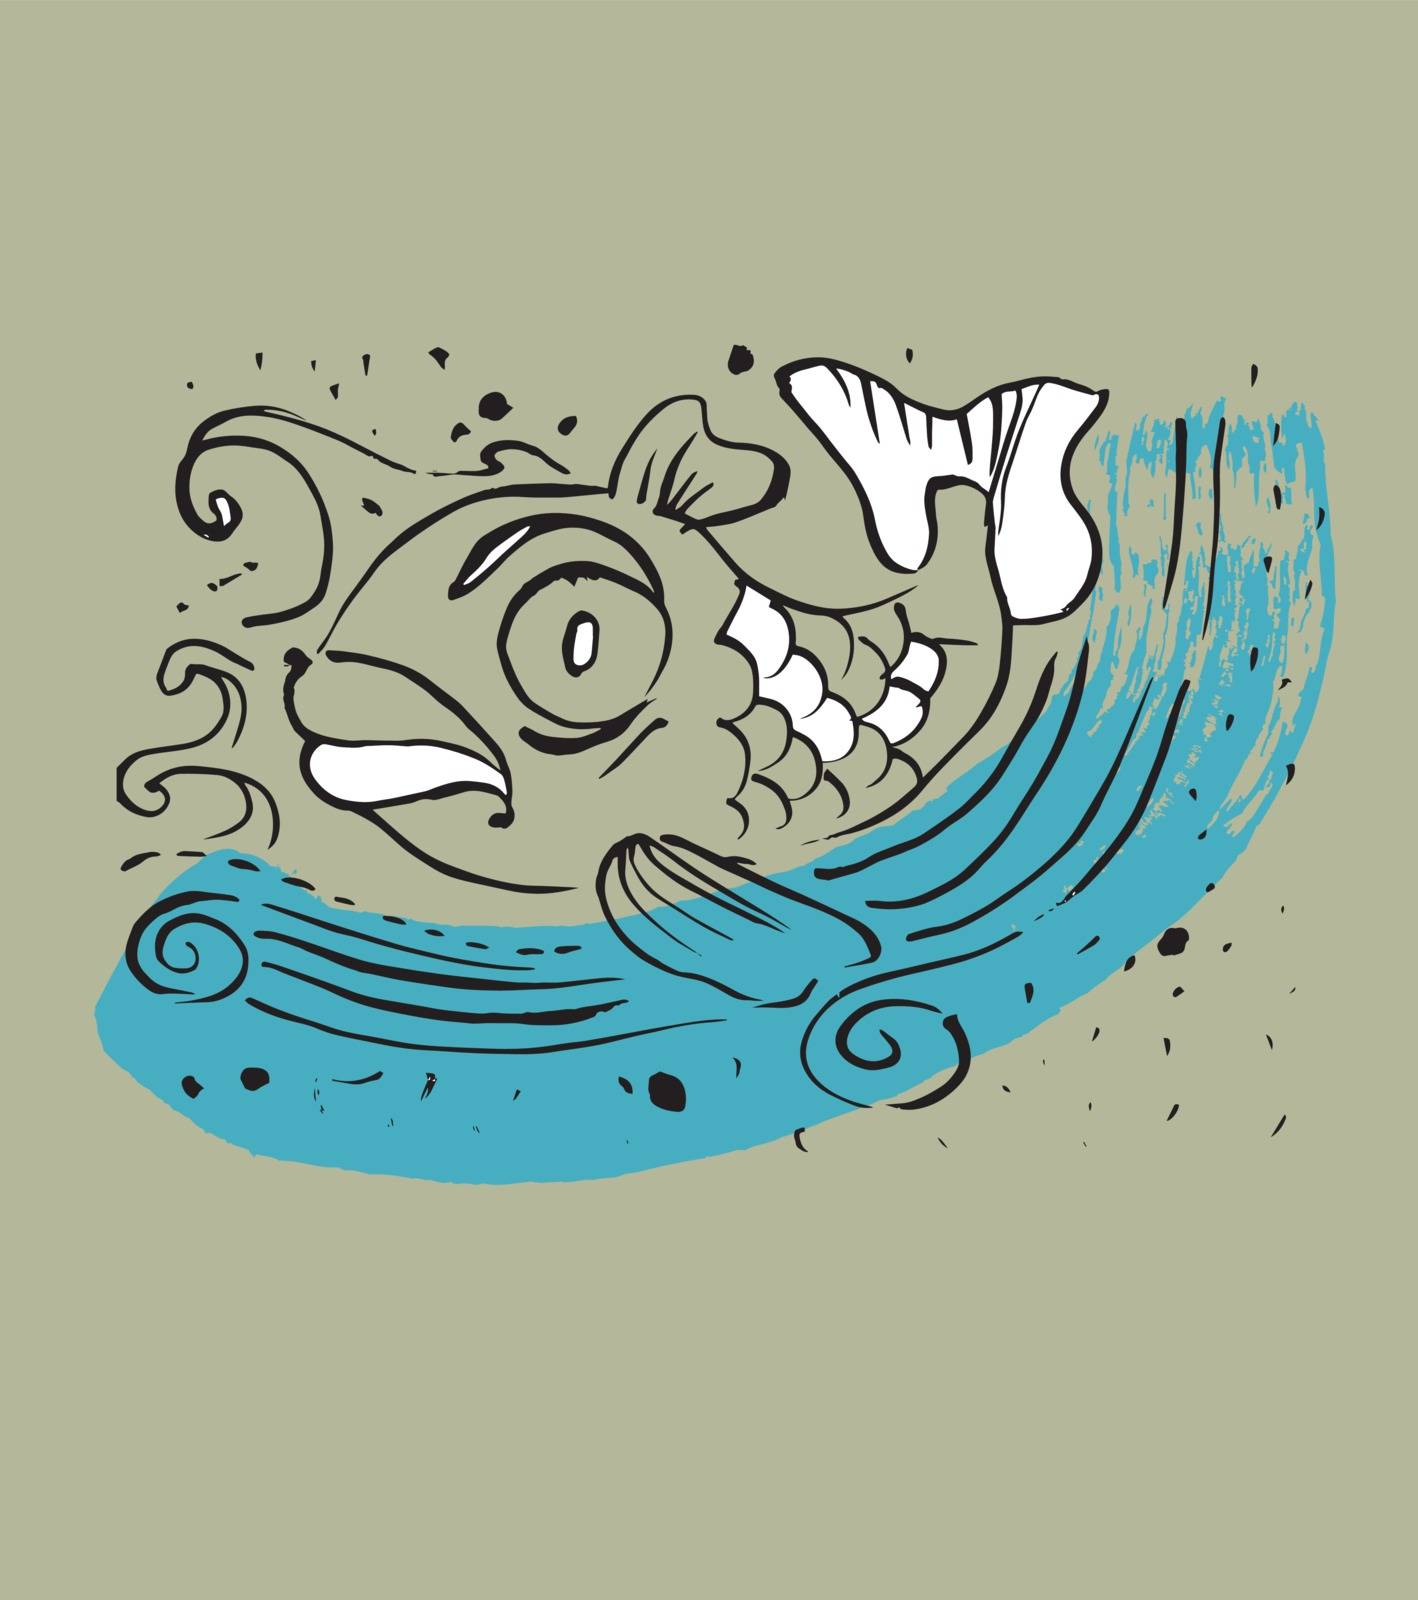 Angry fish by bernardojbp